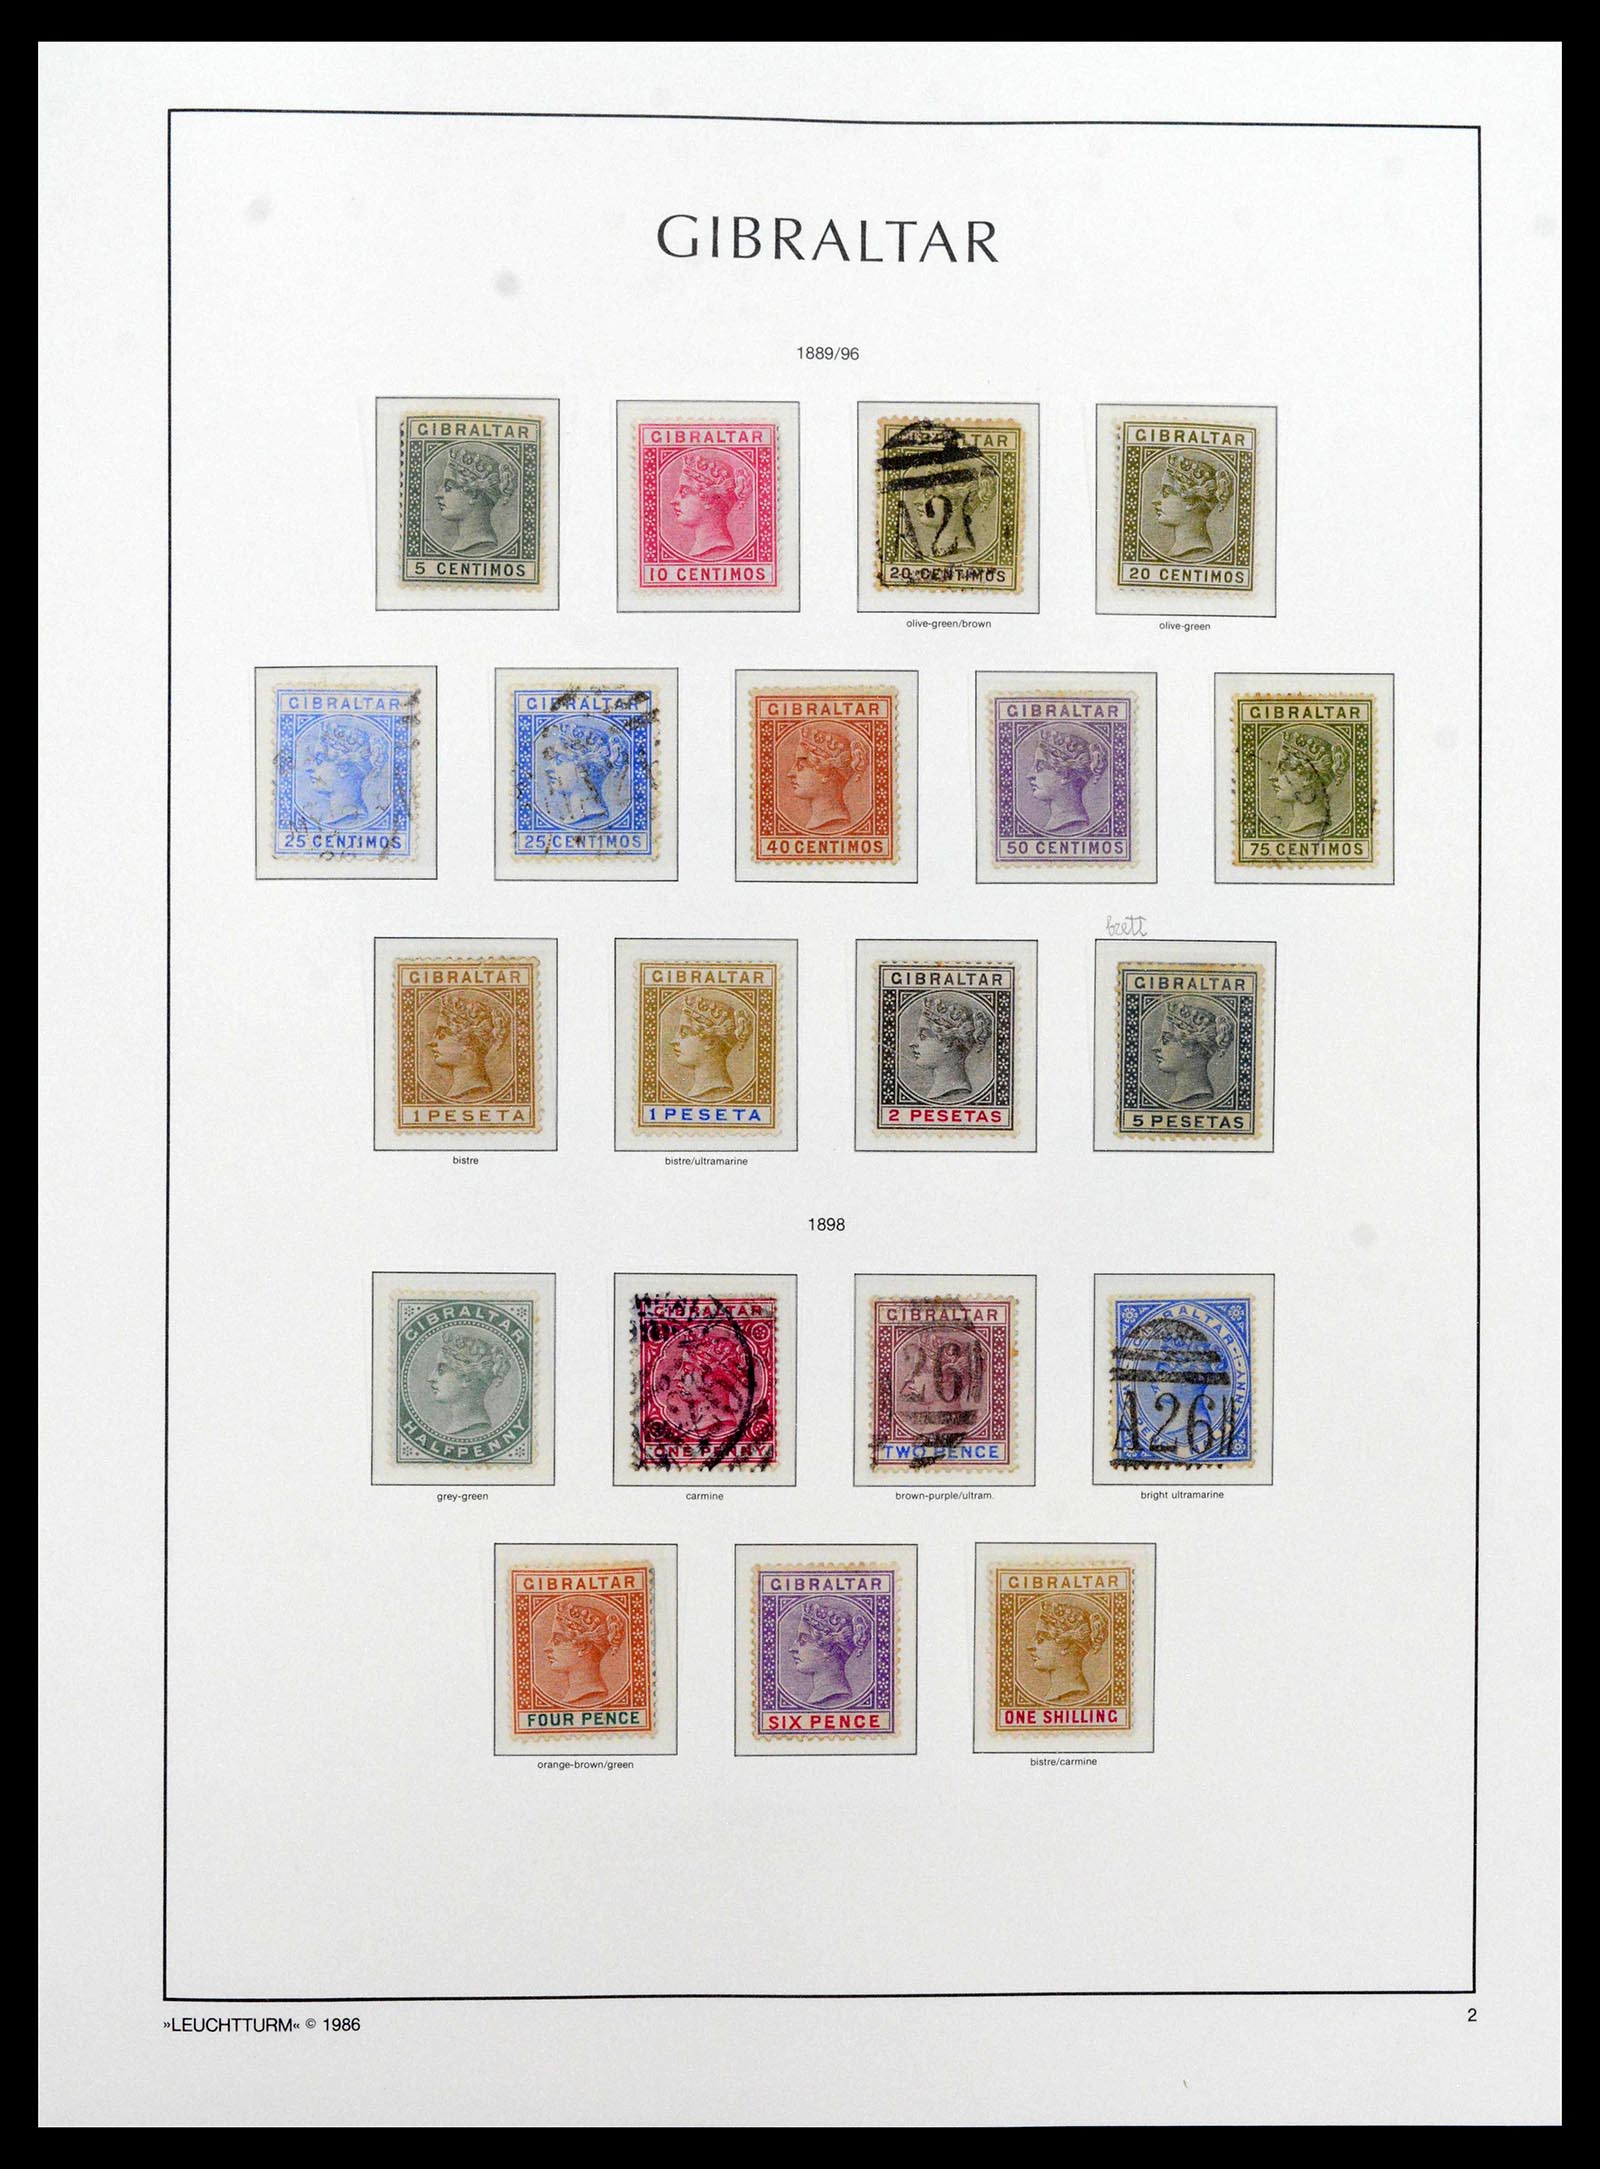 39158 0002 - Stamp collection 39158 Gibraltar 1886-2013.